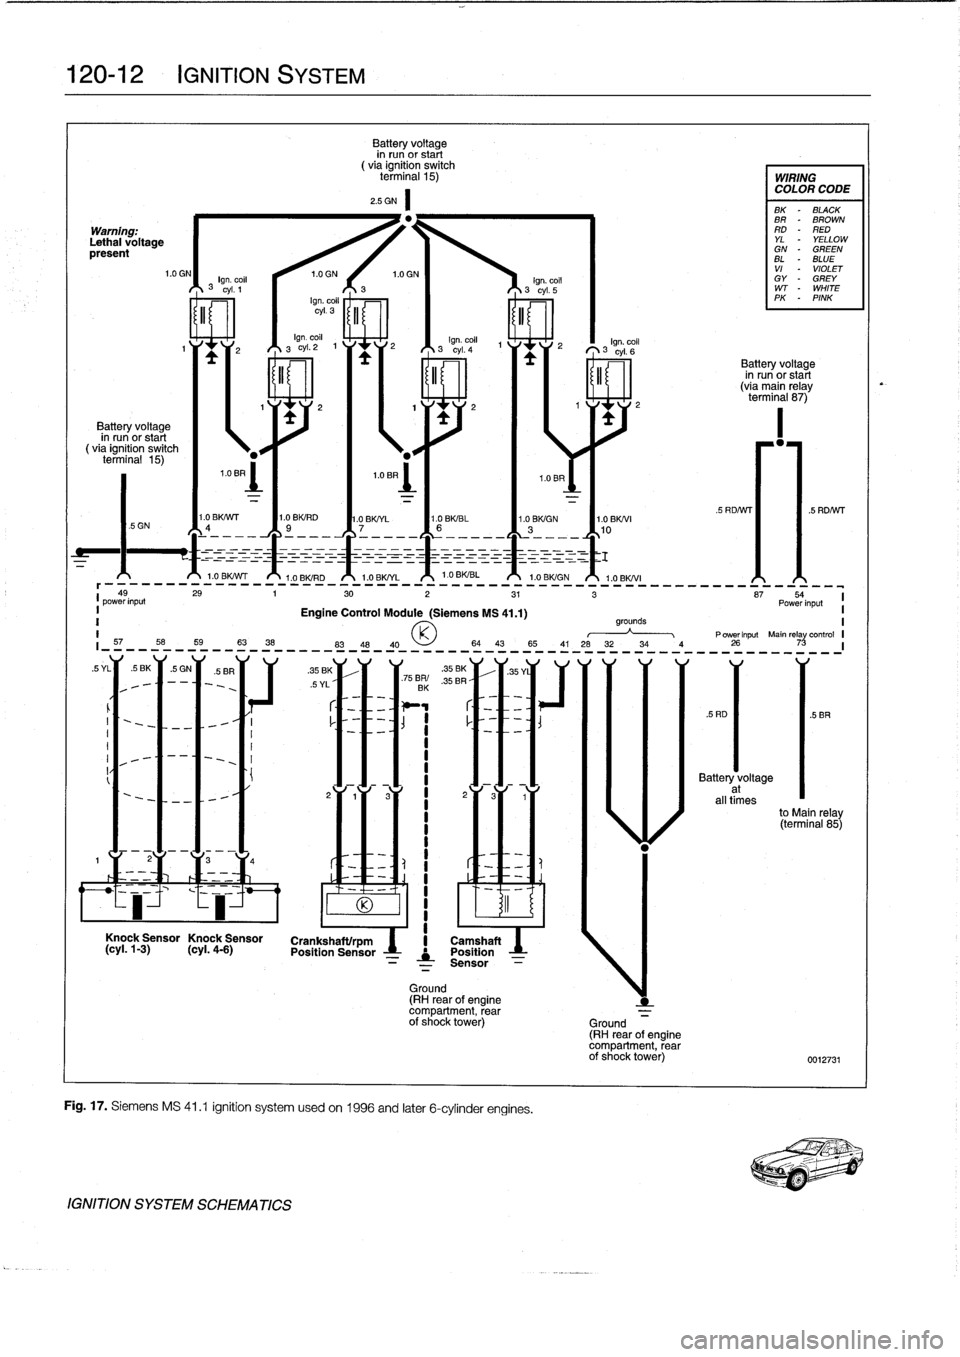 BMW 318i 1995 E36 Workshop Manual 
120-12

	

IGNITION
SYSTEM

Warning
.
Lethal
voltagepresent

Battery
voltage
in
run
or
start
(via
ignitíon
switch
terminal
15)

I
t

IGNITION
SYSTEM
SCHEMATICS

Battery
voltage
in
run
or
start
(
via